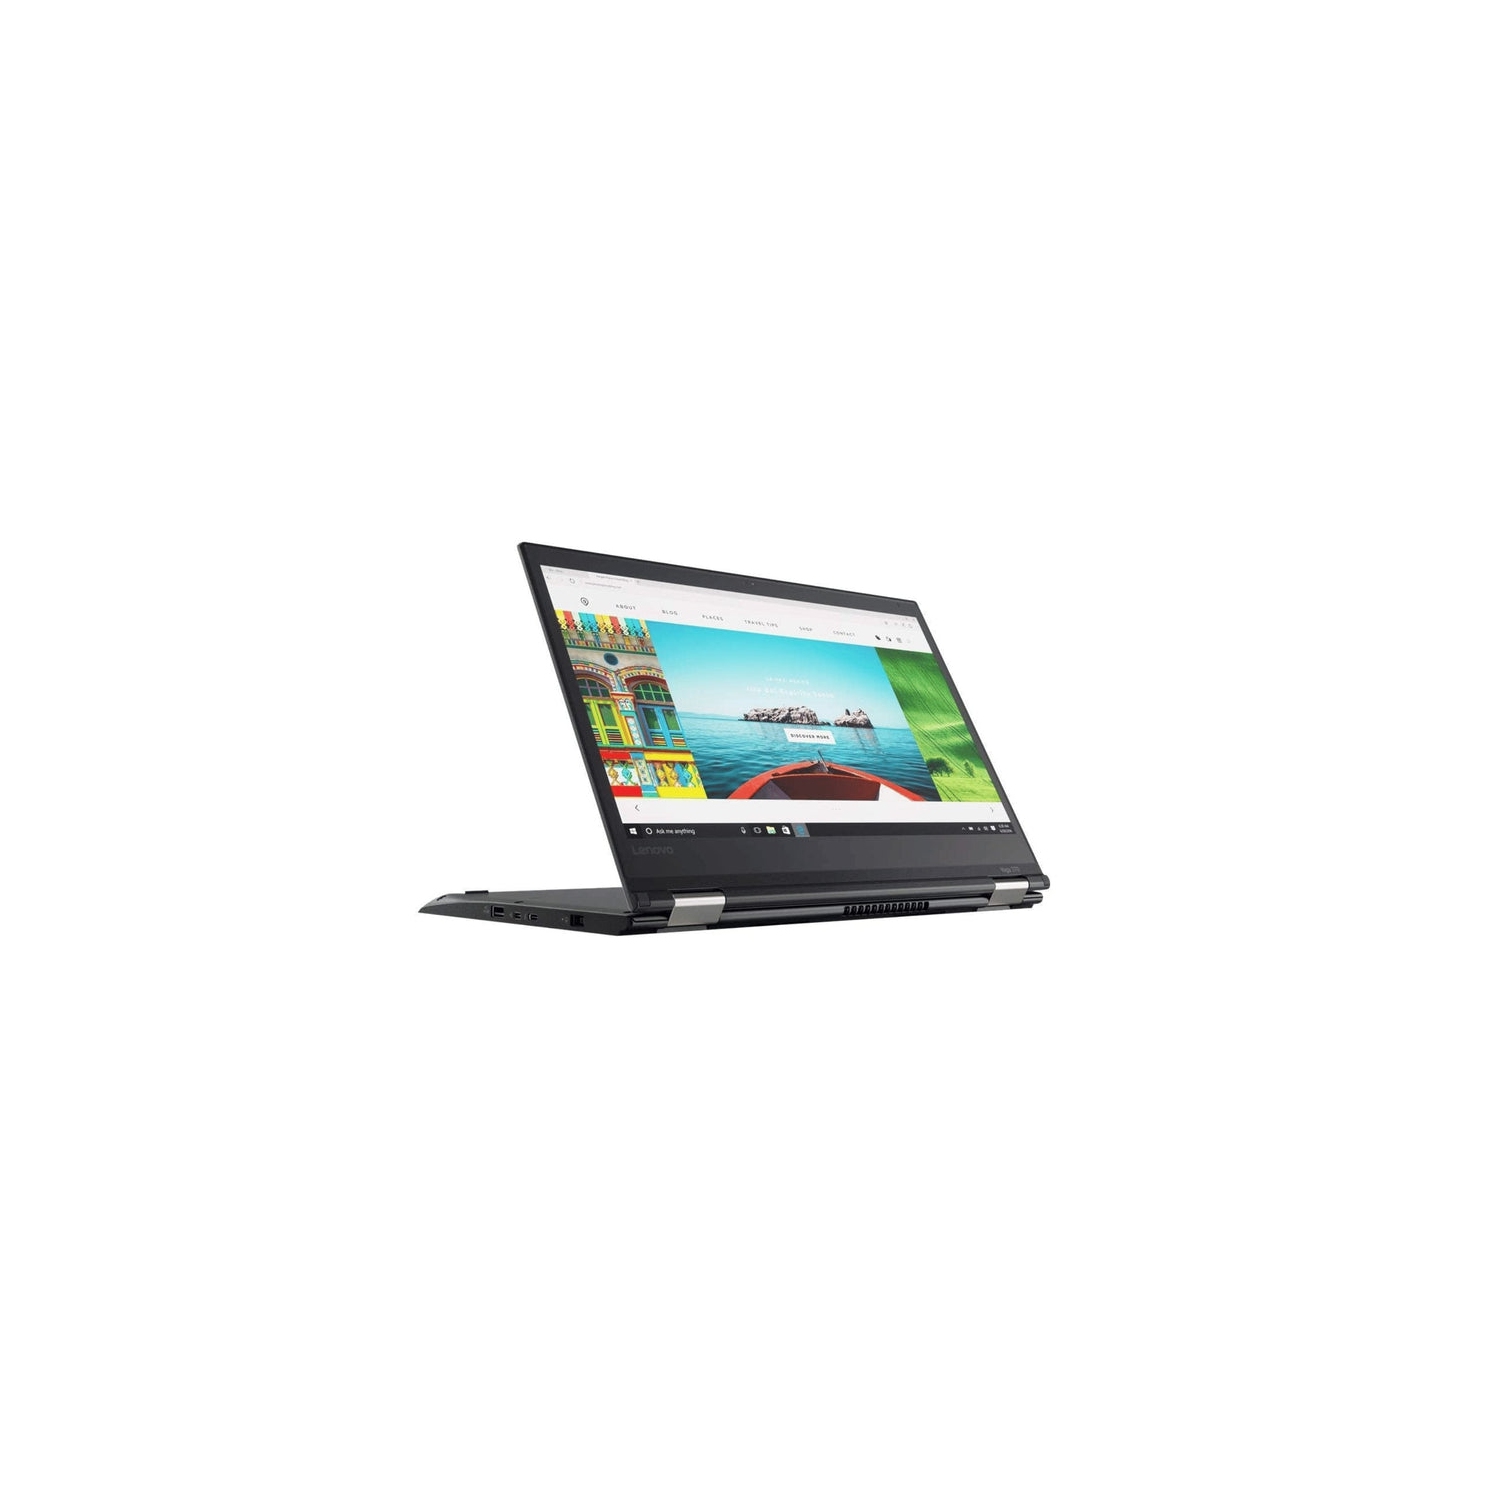 Refurbished (Good) - Lenovo Yoga 370 13" Laptop - Touch Screen/Intel Core i5/256GB SSD/8GB RAM/Windows 10/11